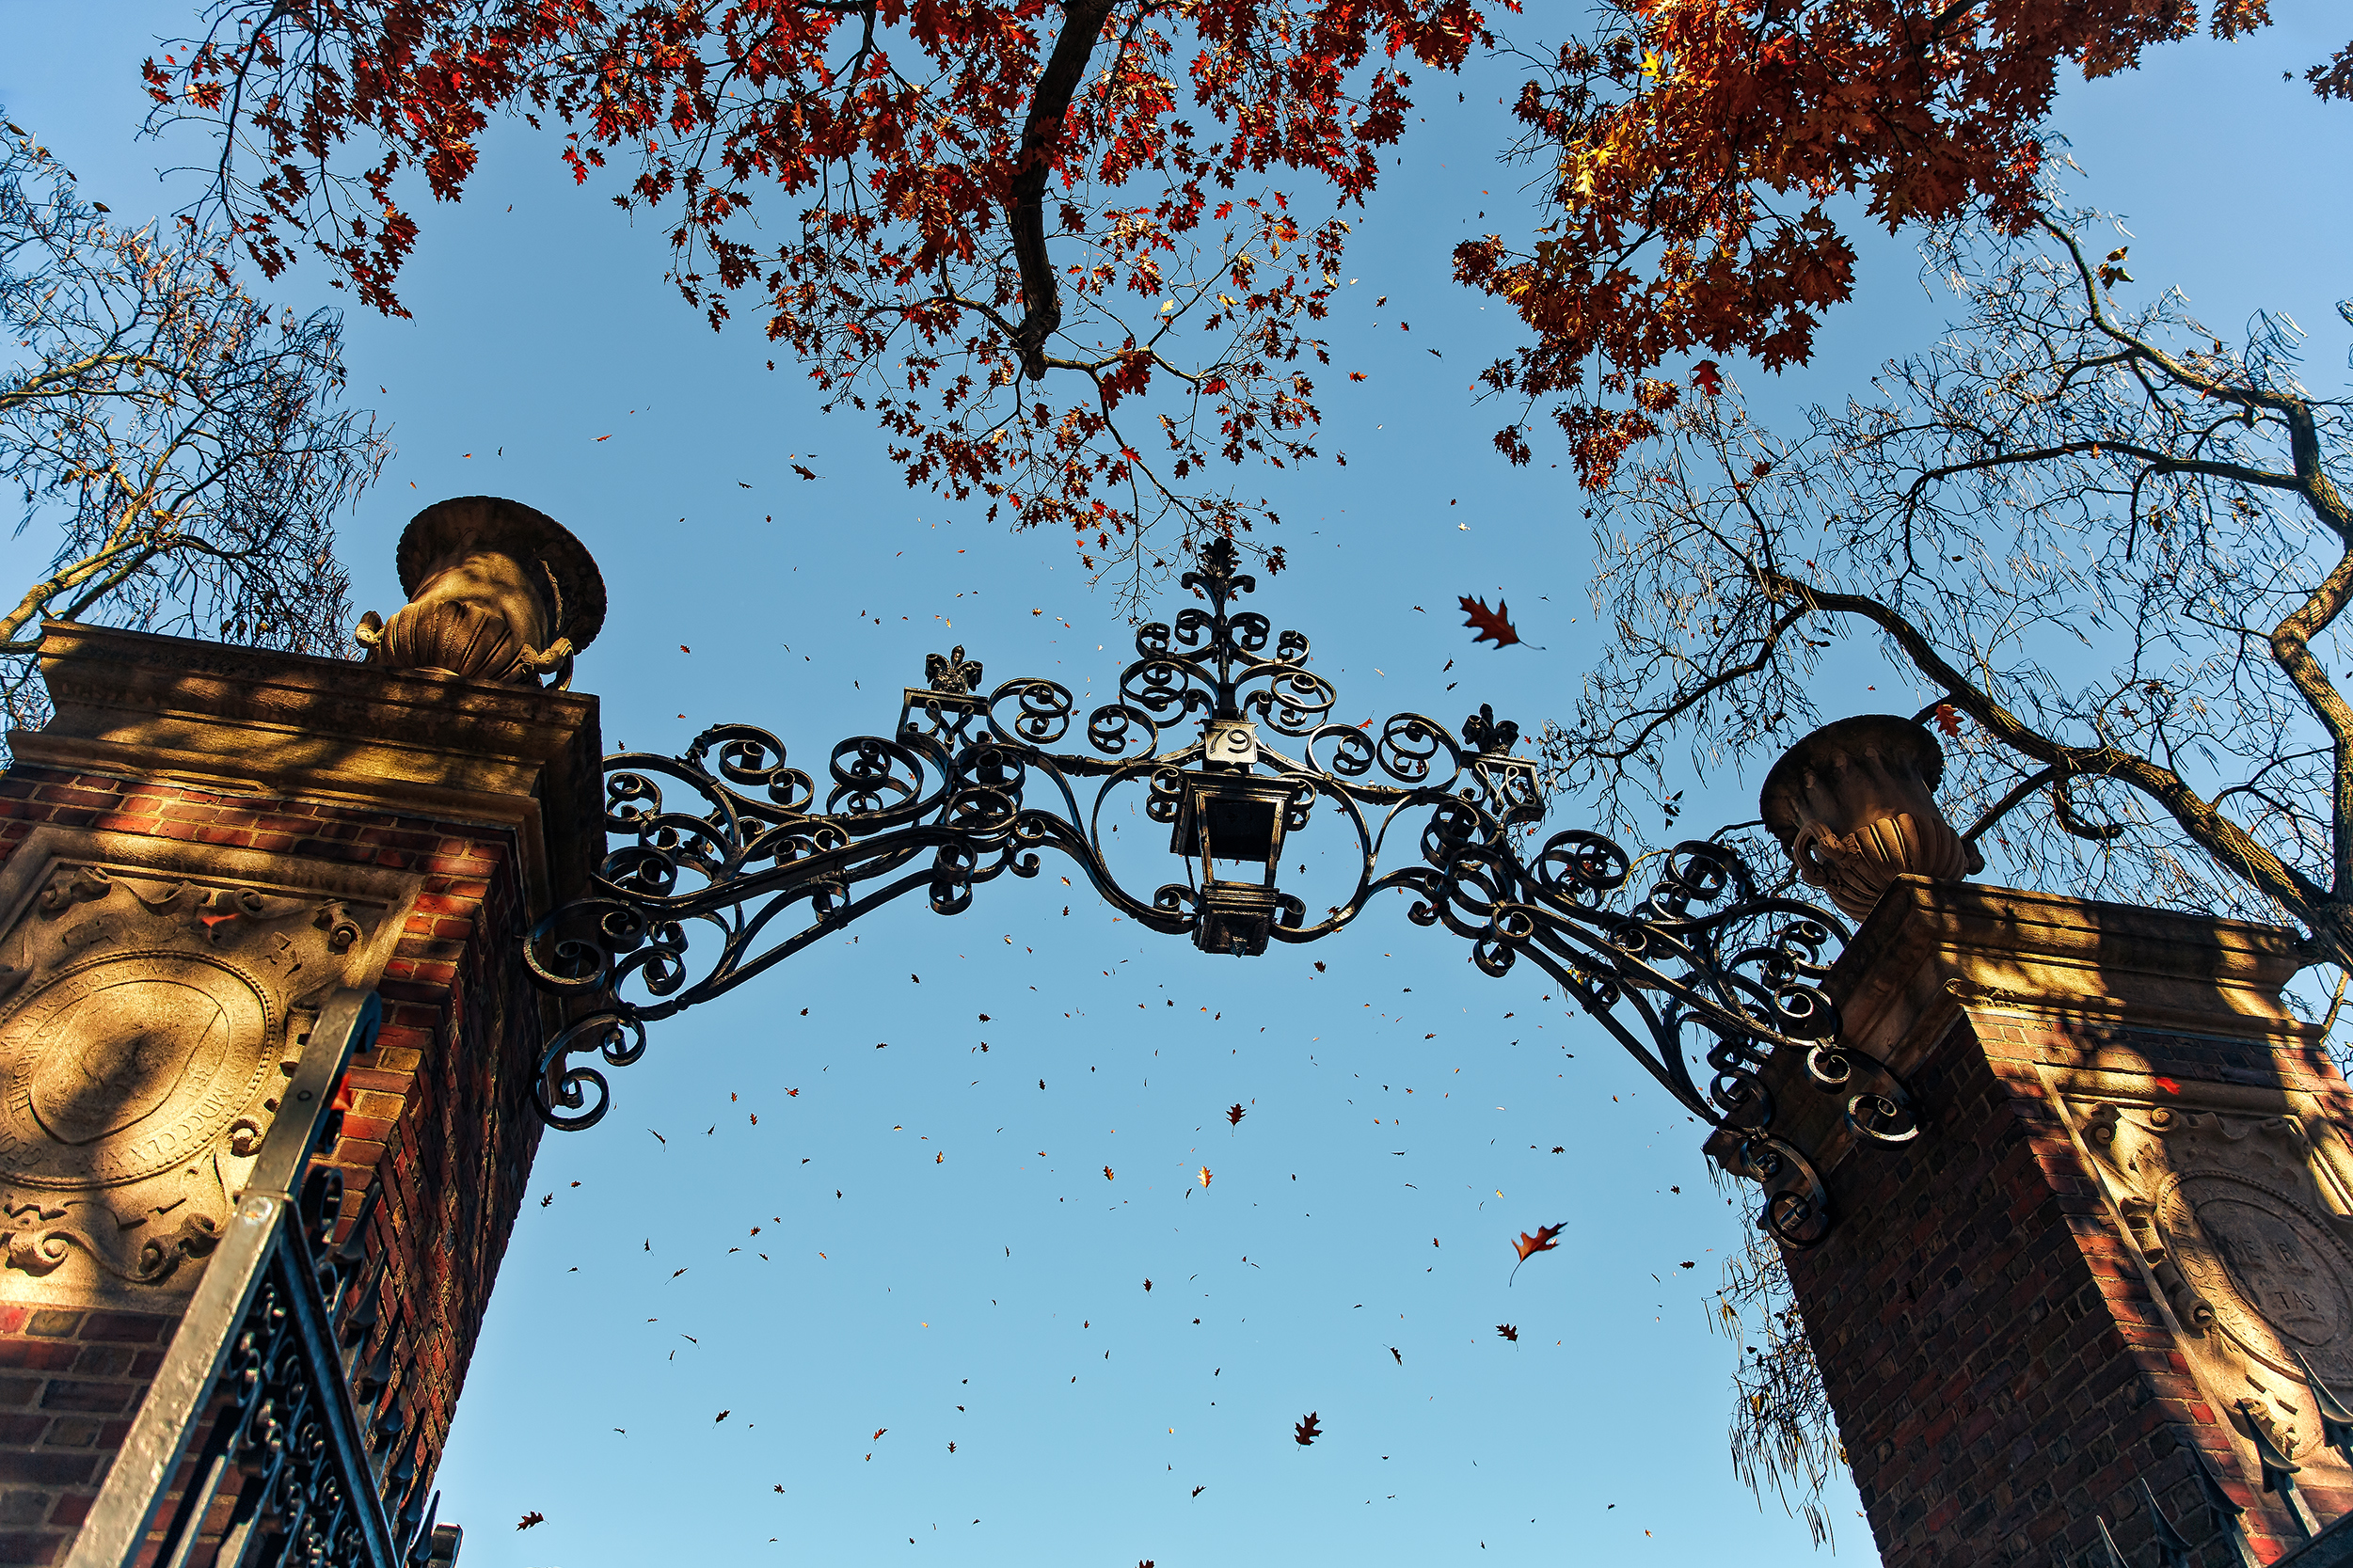 Harvard University's iron gate in Cambridge, Massachusetts, USA (Getty Images)